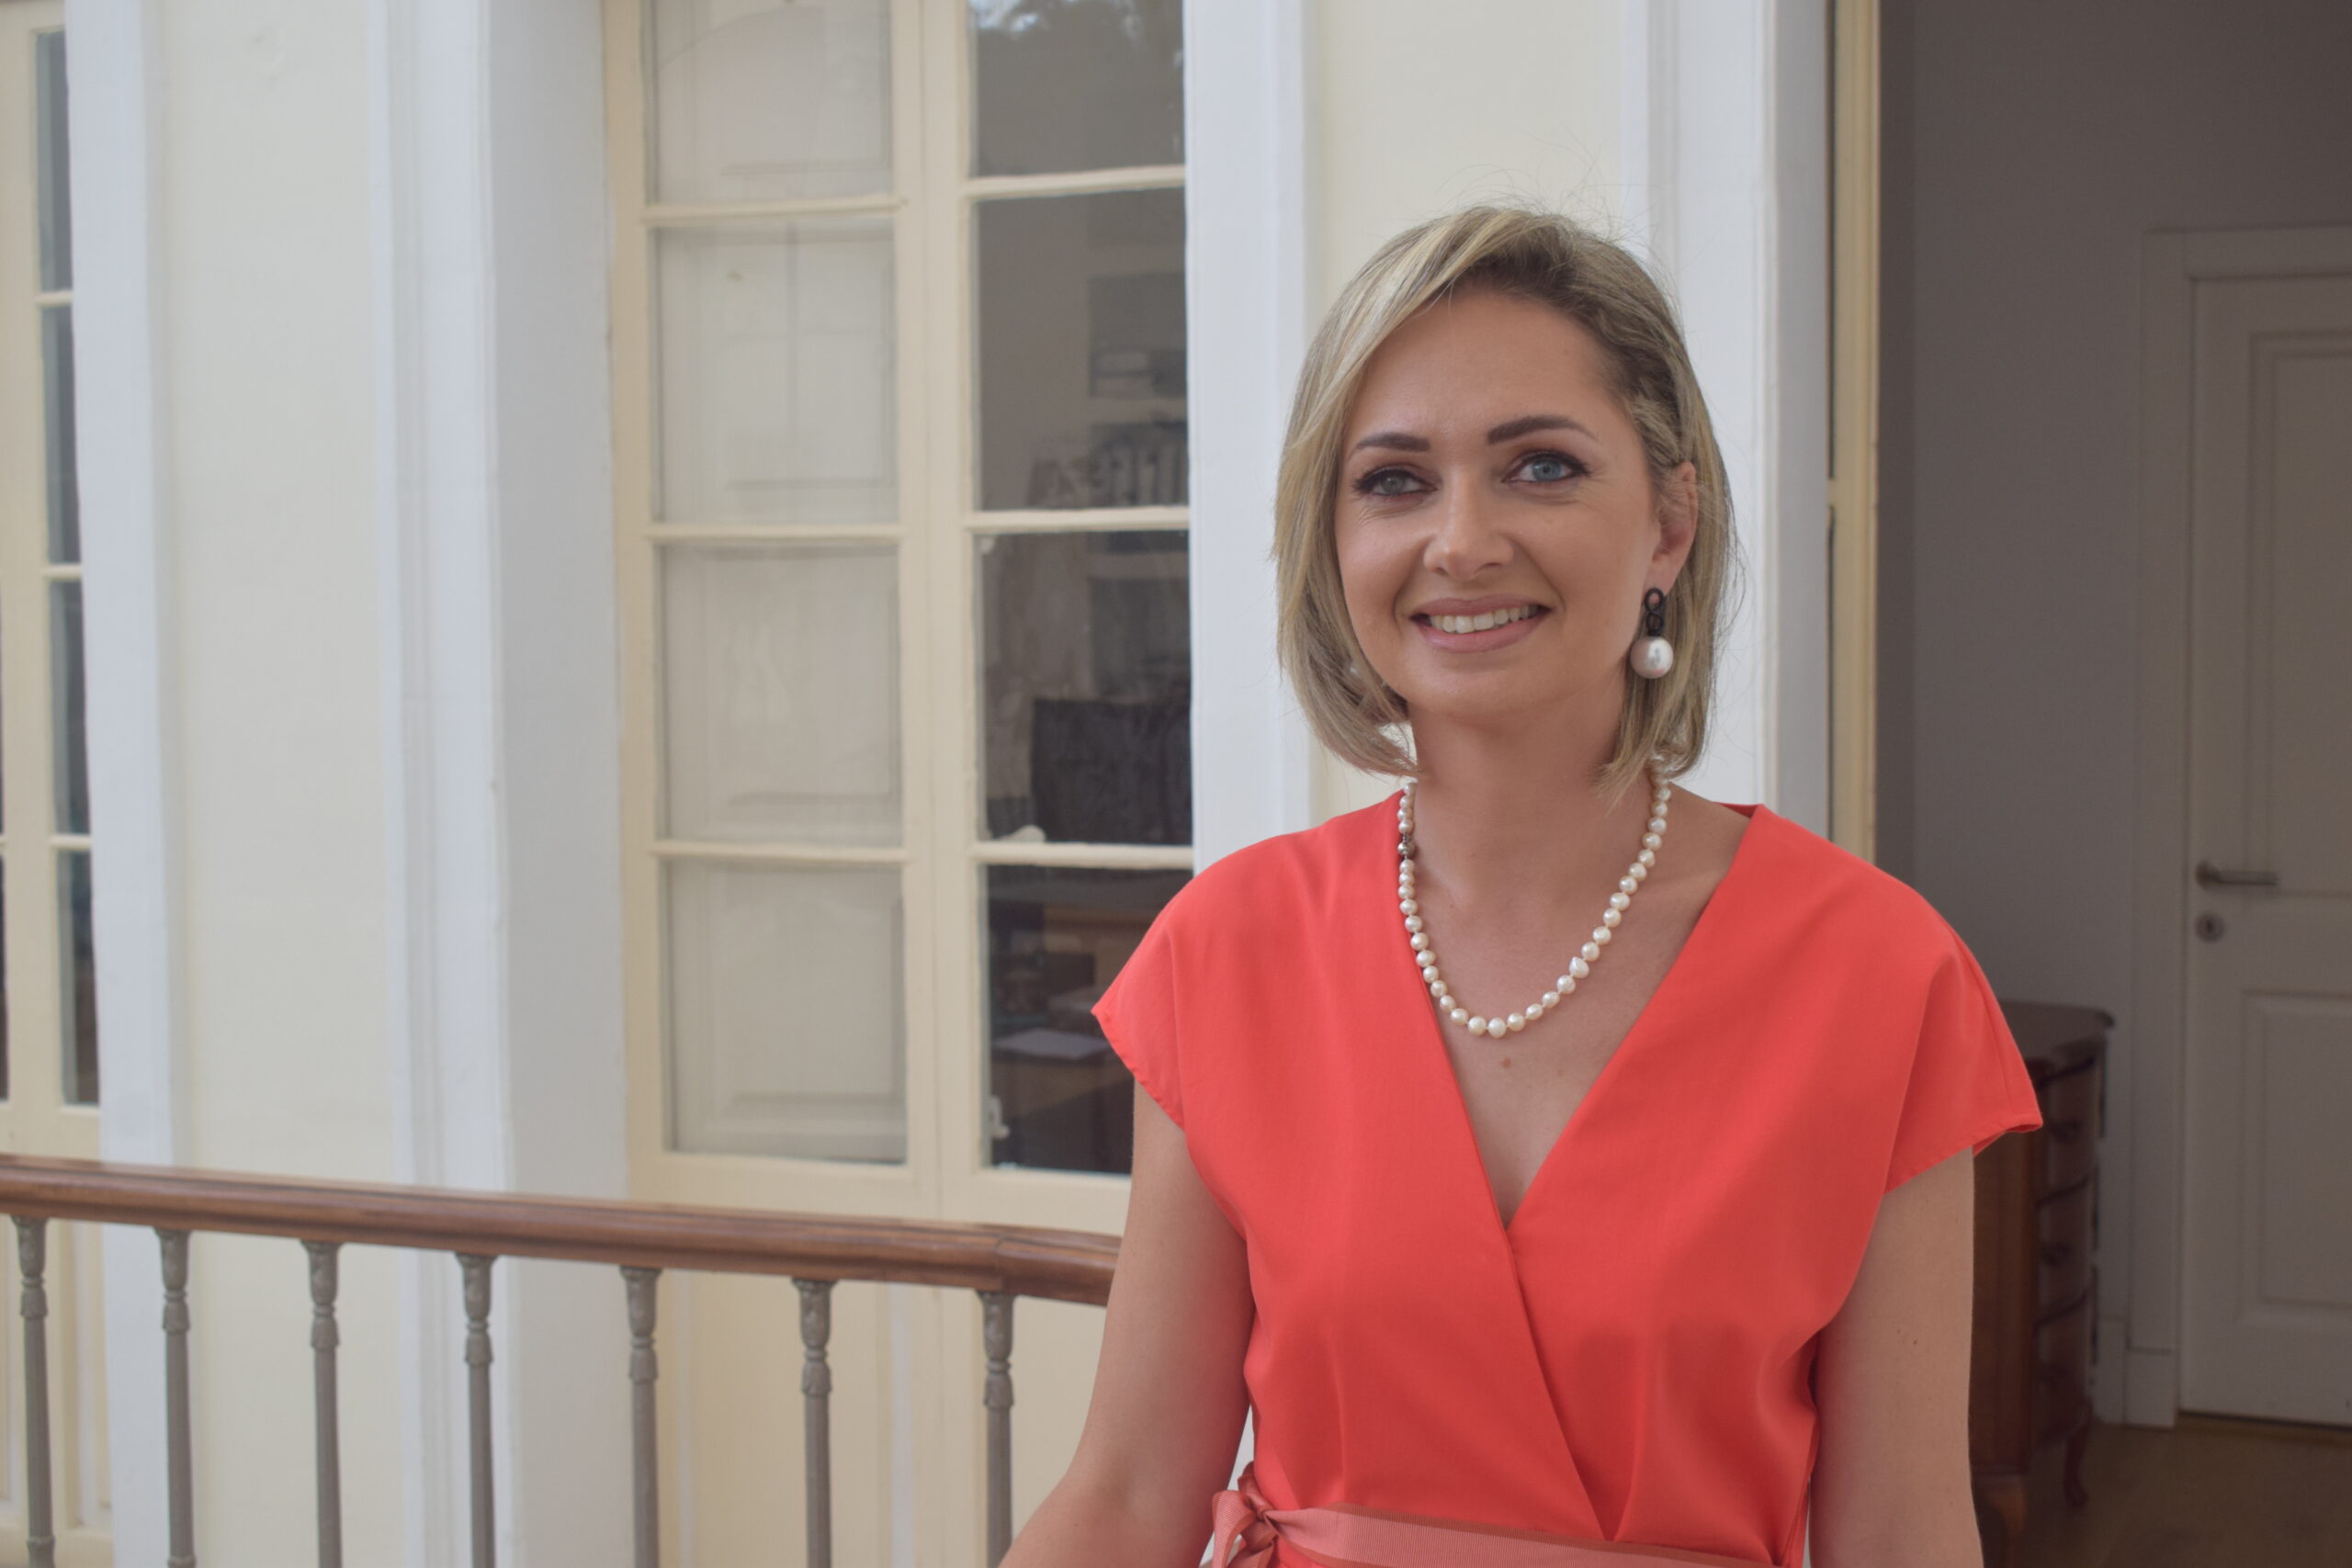 Rachel Attard joins The Malta Chamber as its Media & Communication Strategist